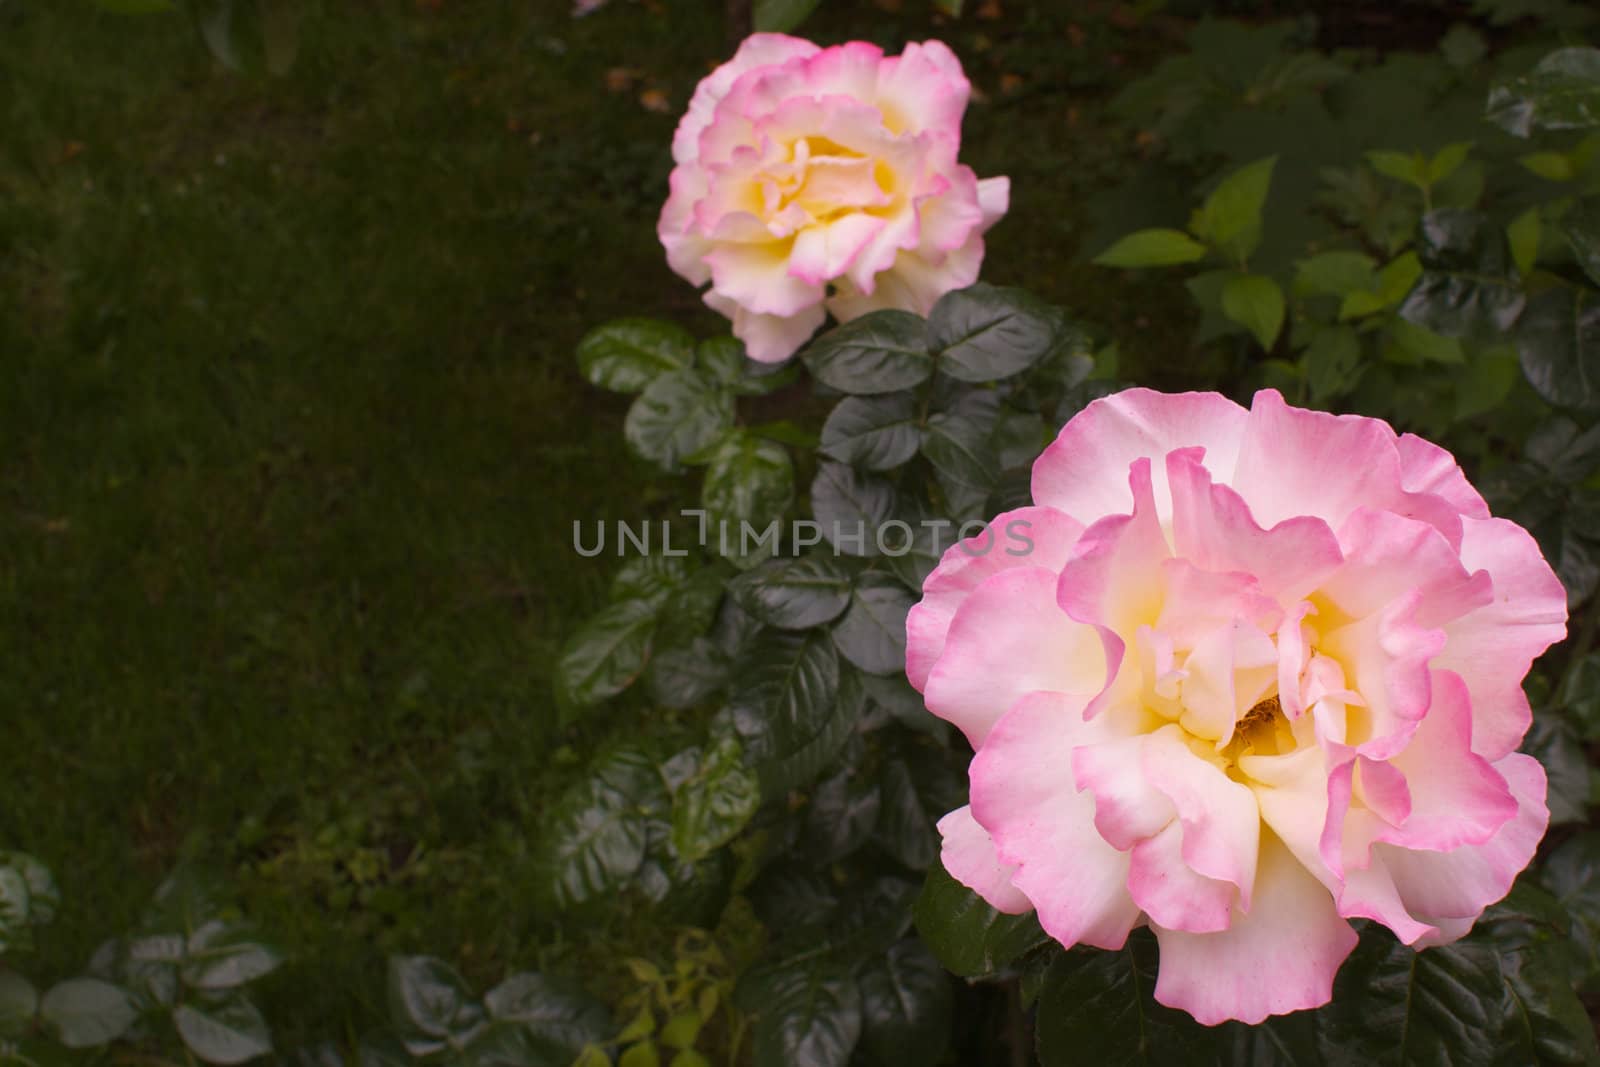 Large Pink and Yellow Rose by bobkeenan